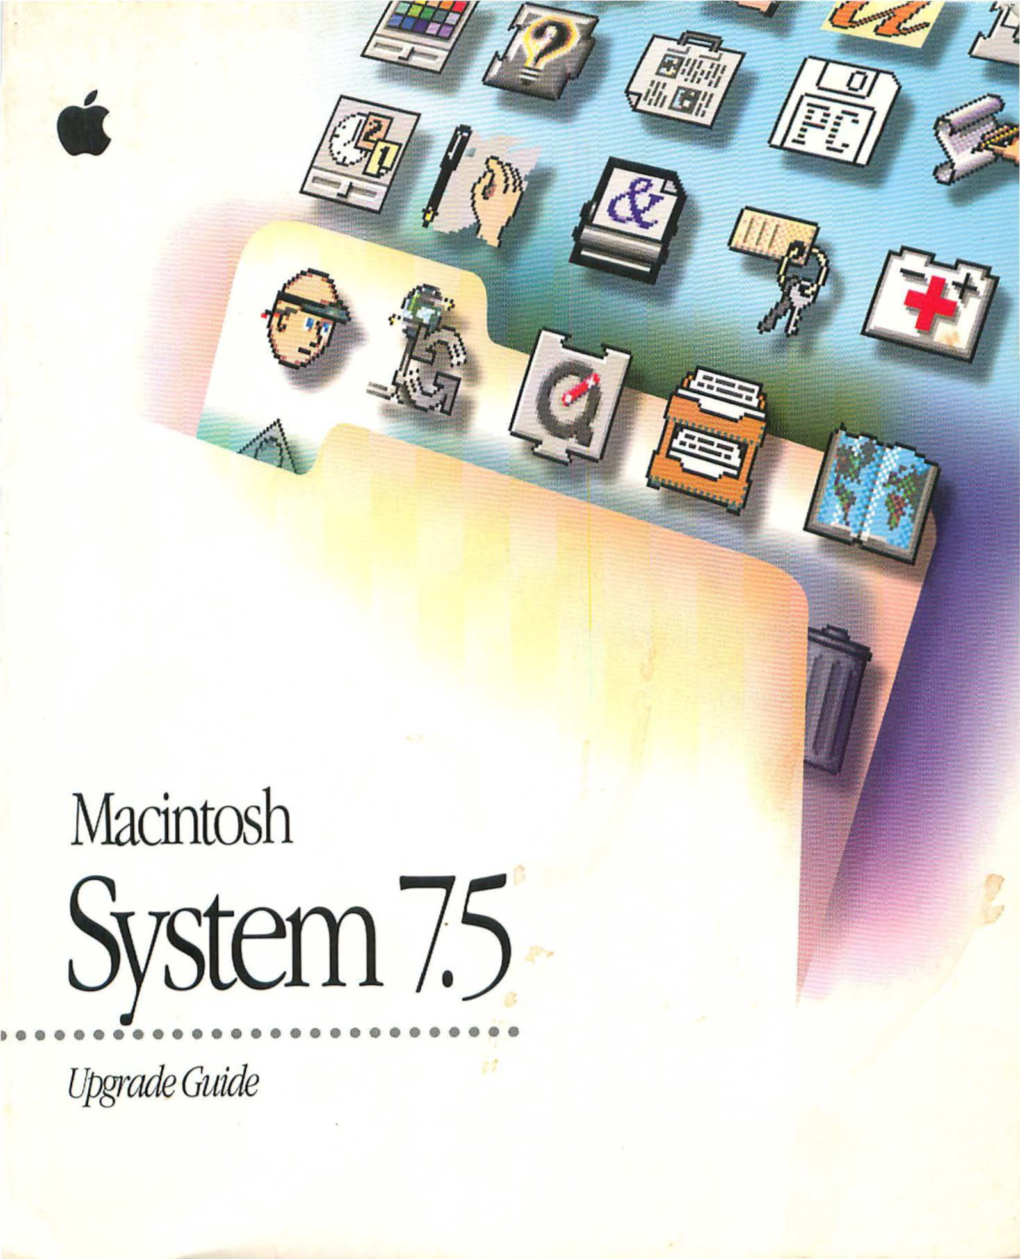 Macintosh System 7.5 Upgrade Guide 1994.Pdf